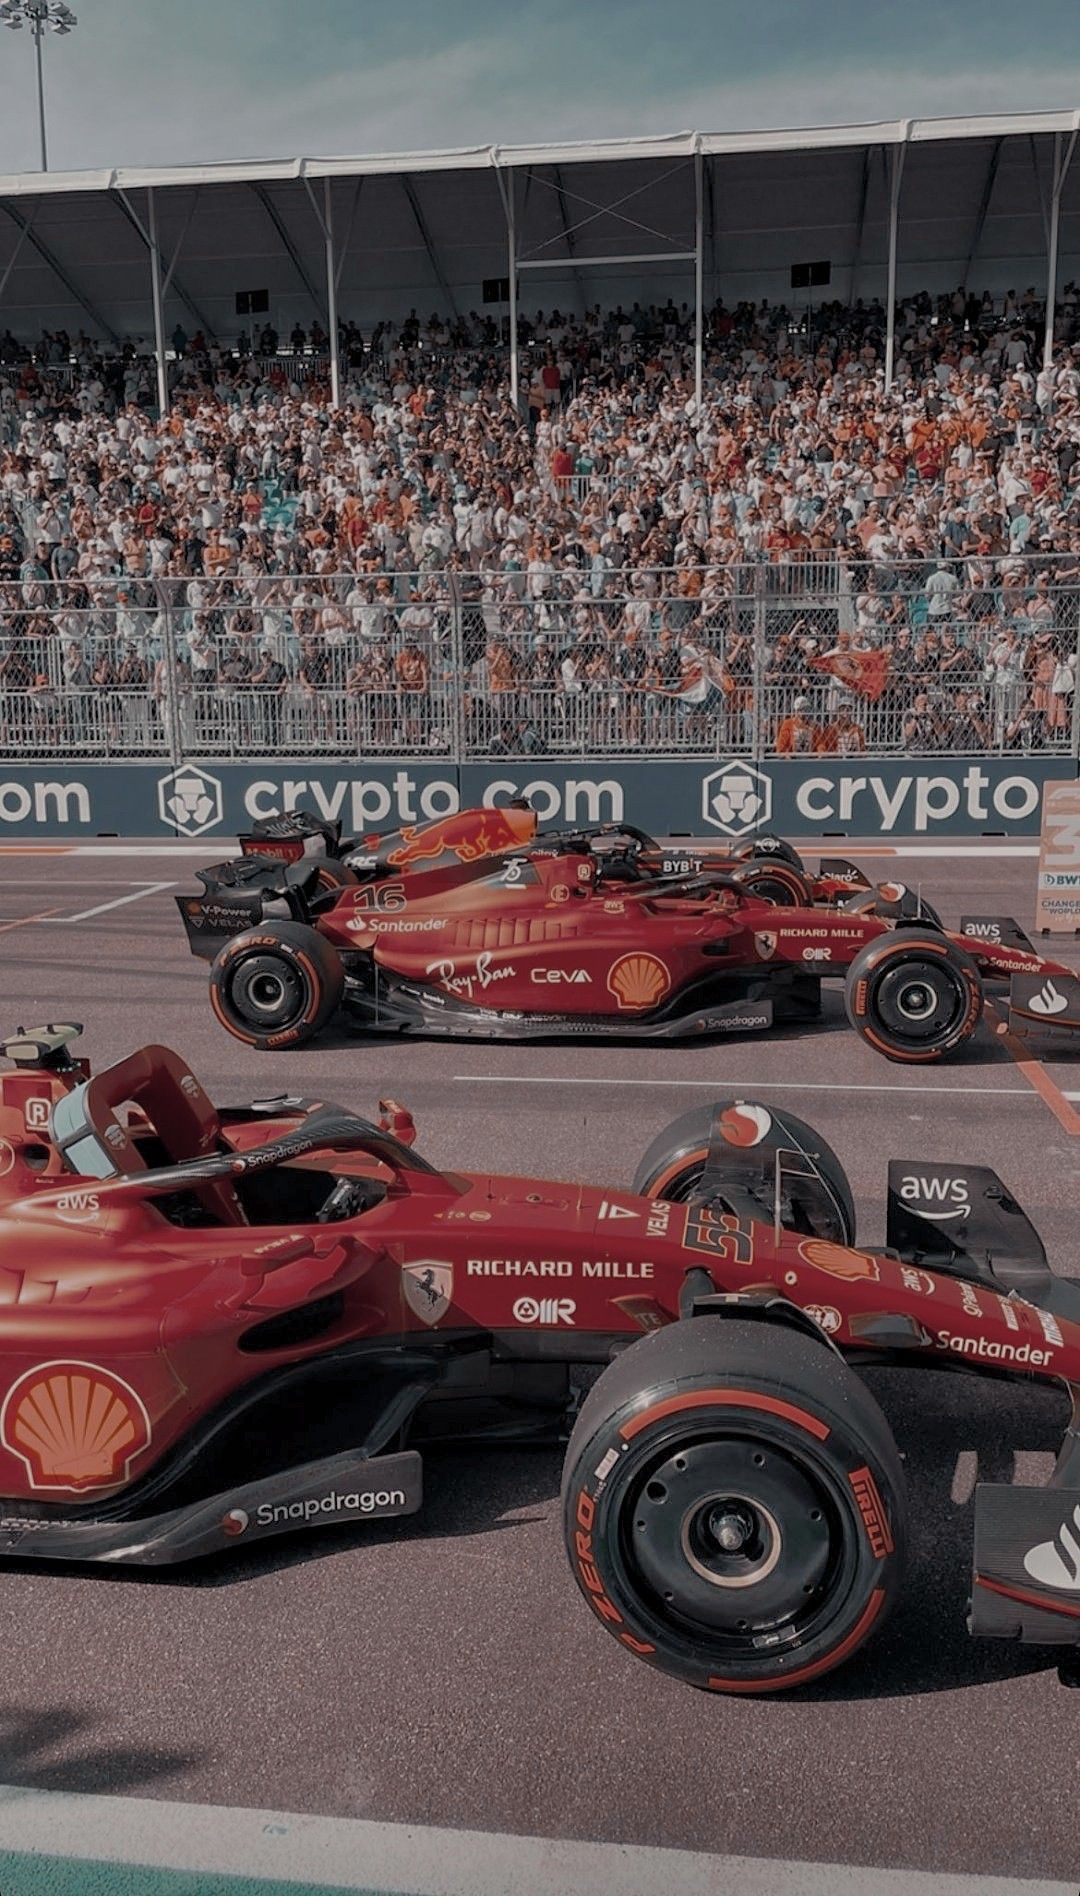 Ferrari Hintergrundbild 1080x1896. Ferrari f1 aesthetic. Formula 1 car, Formula 1 car racing, Ferrari f1